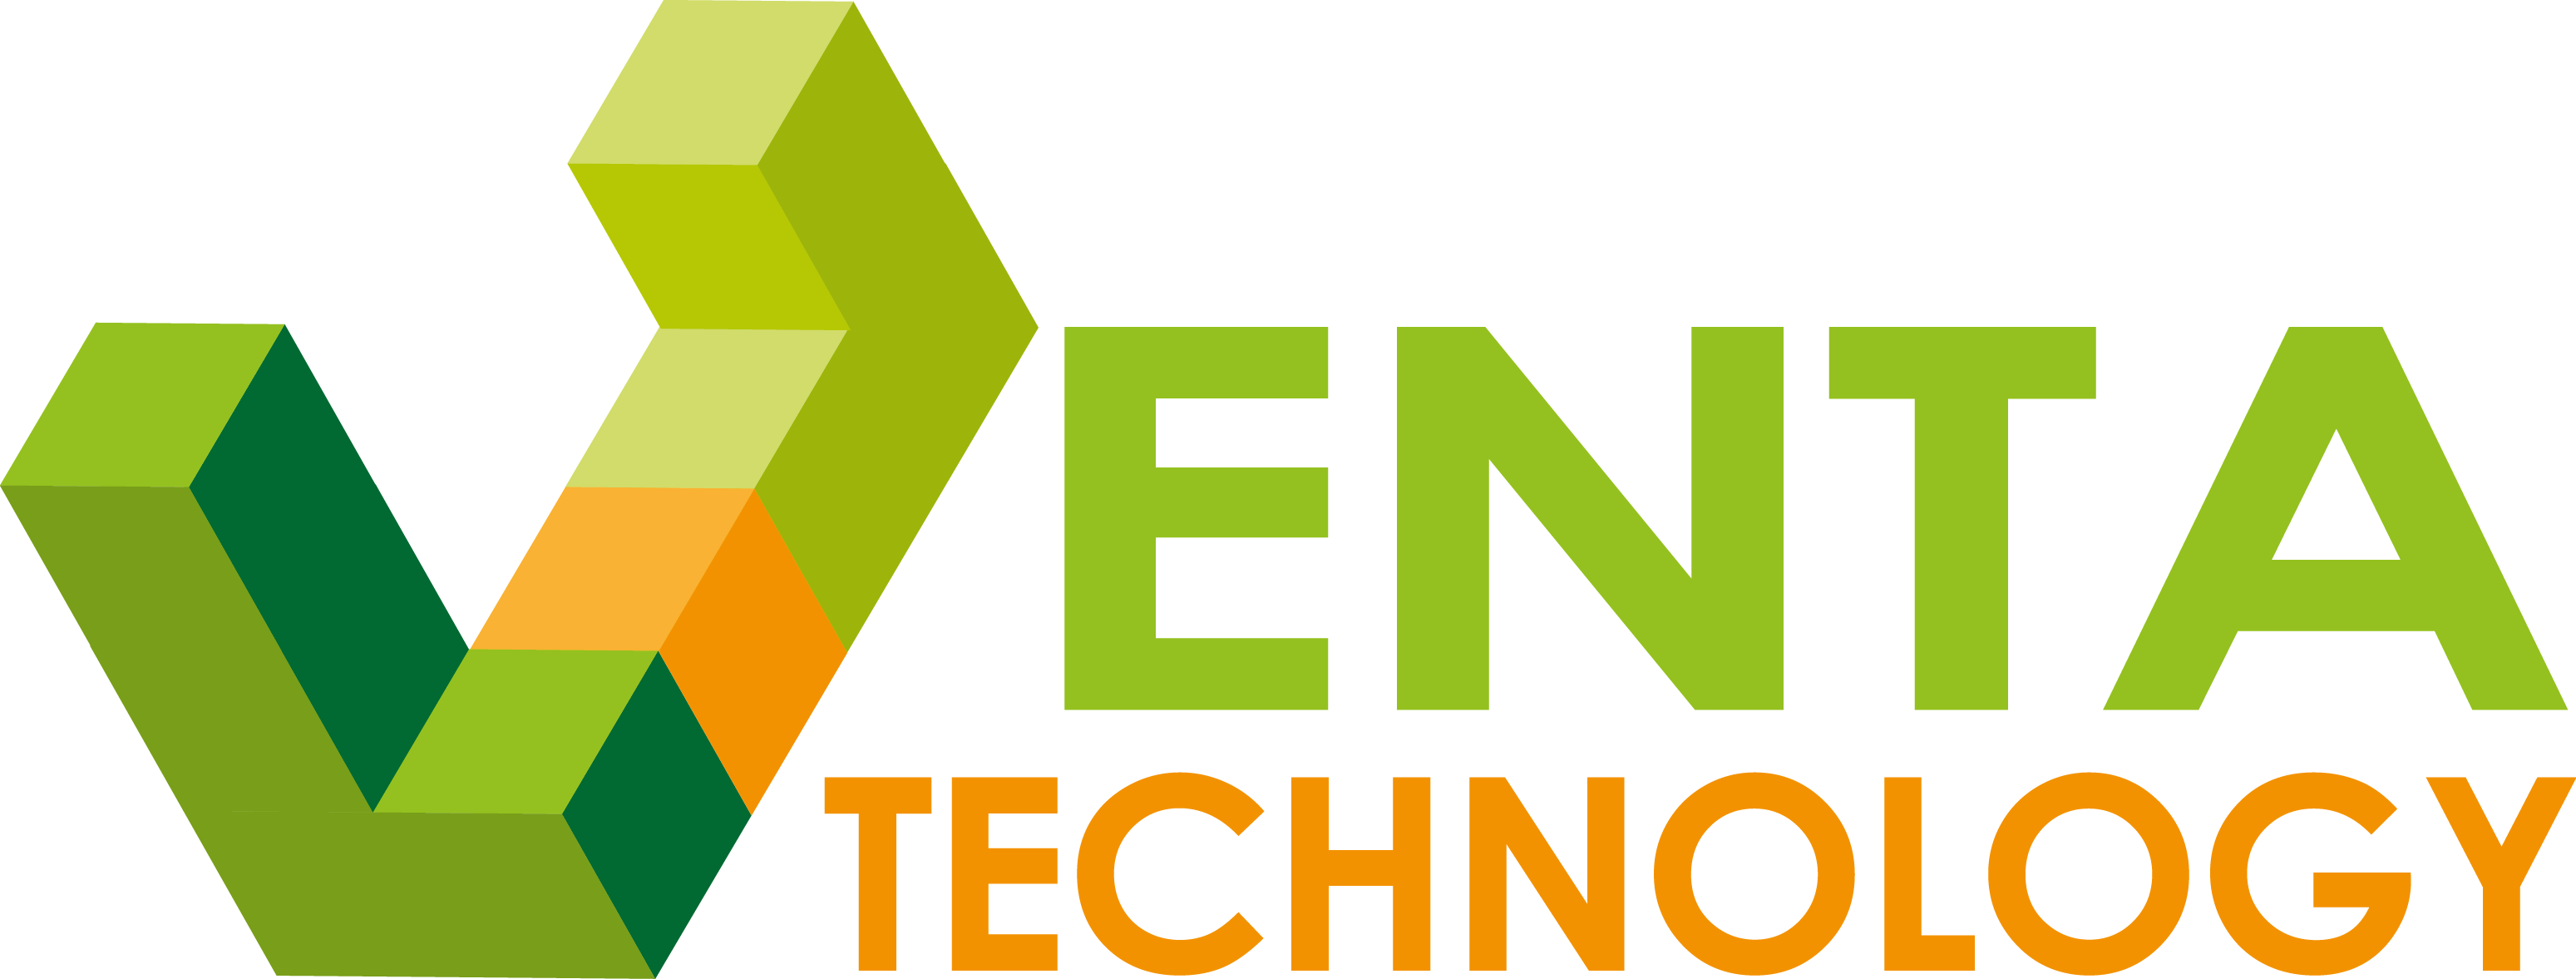 Venta-Technology